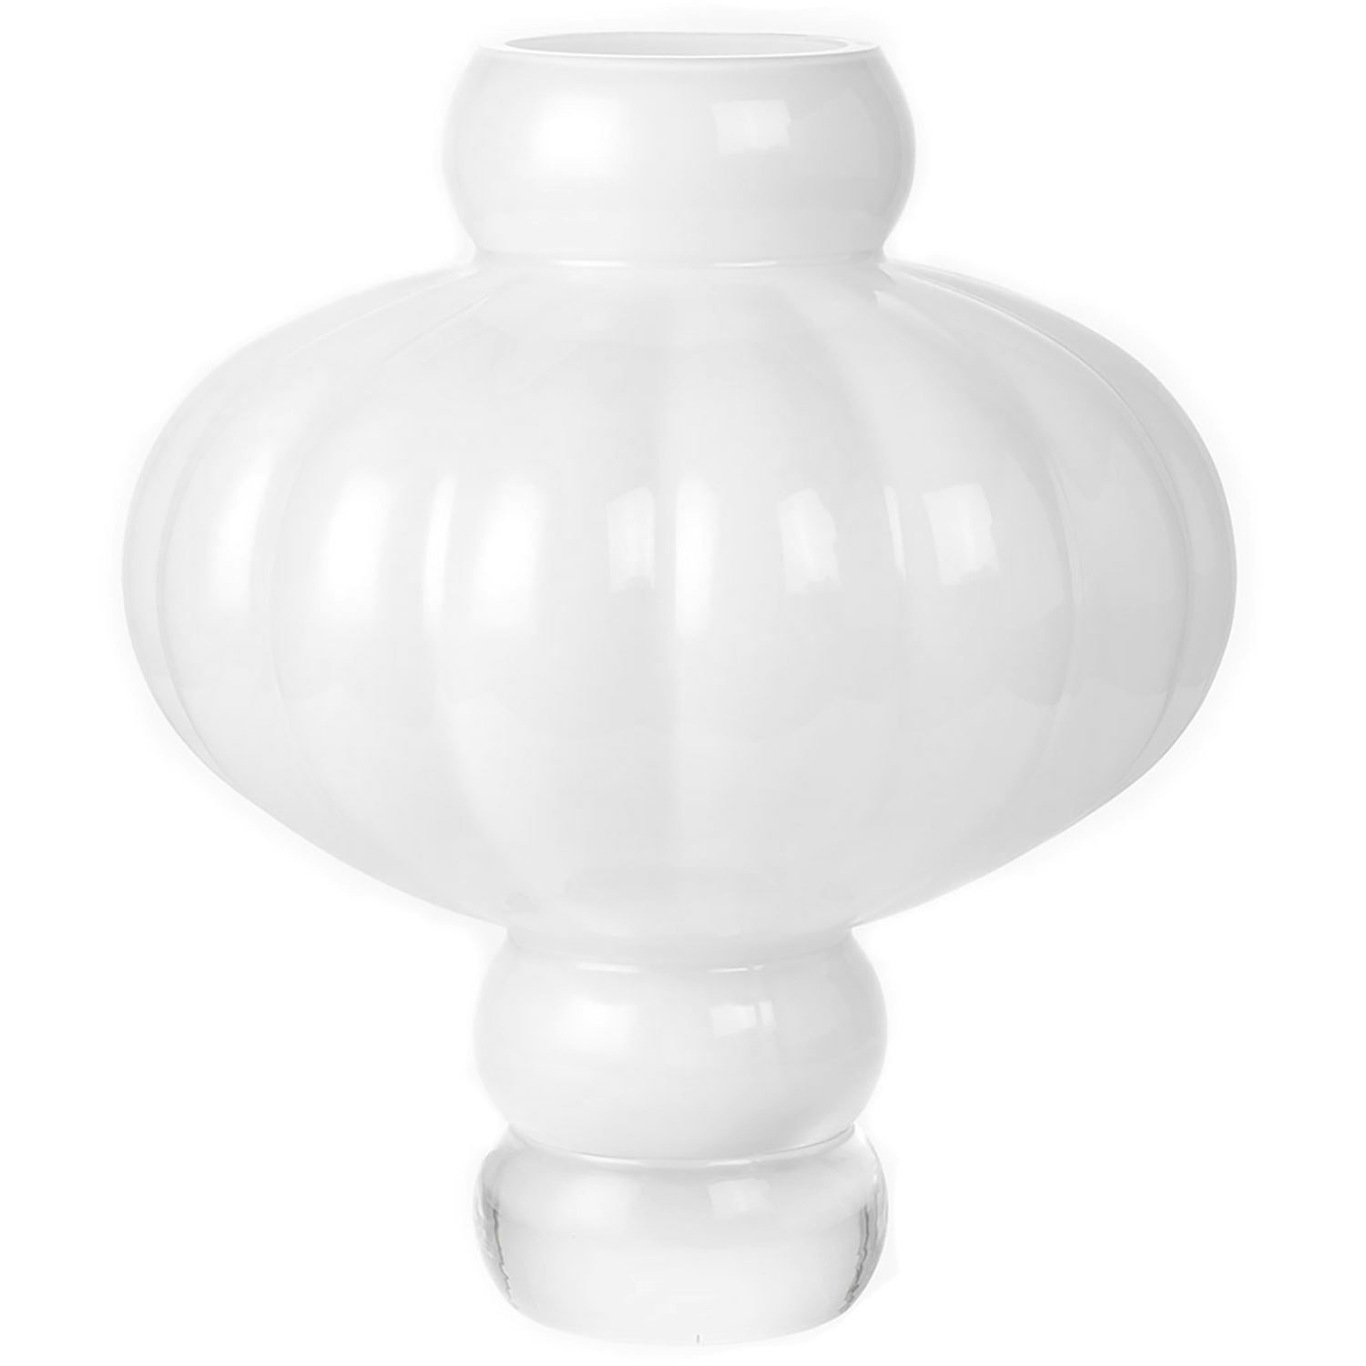 https://royaldesign.com/image/11/louise-roe-balloon-vase-08-clear-0?w=800&quality=80